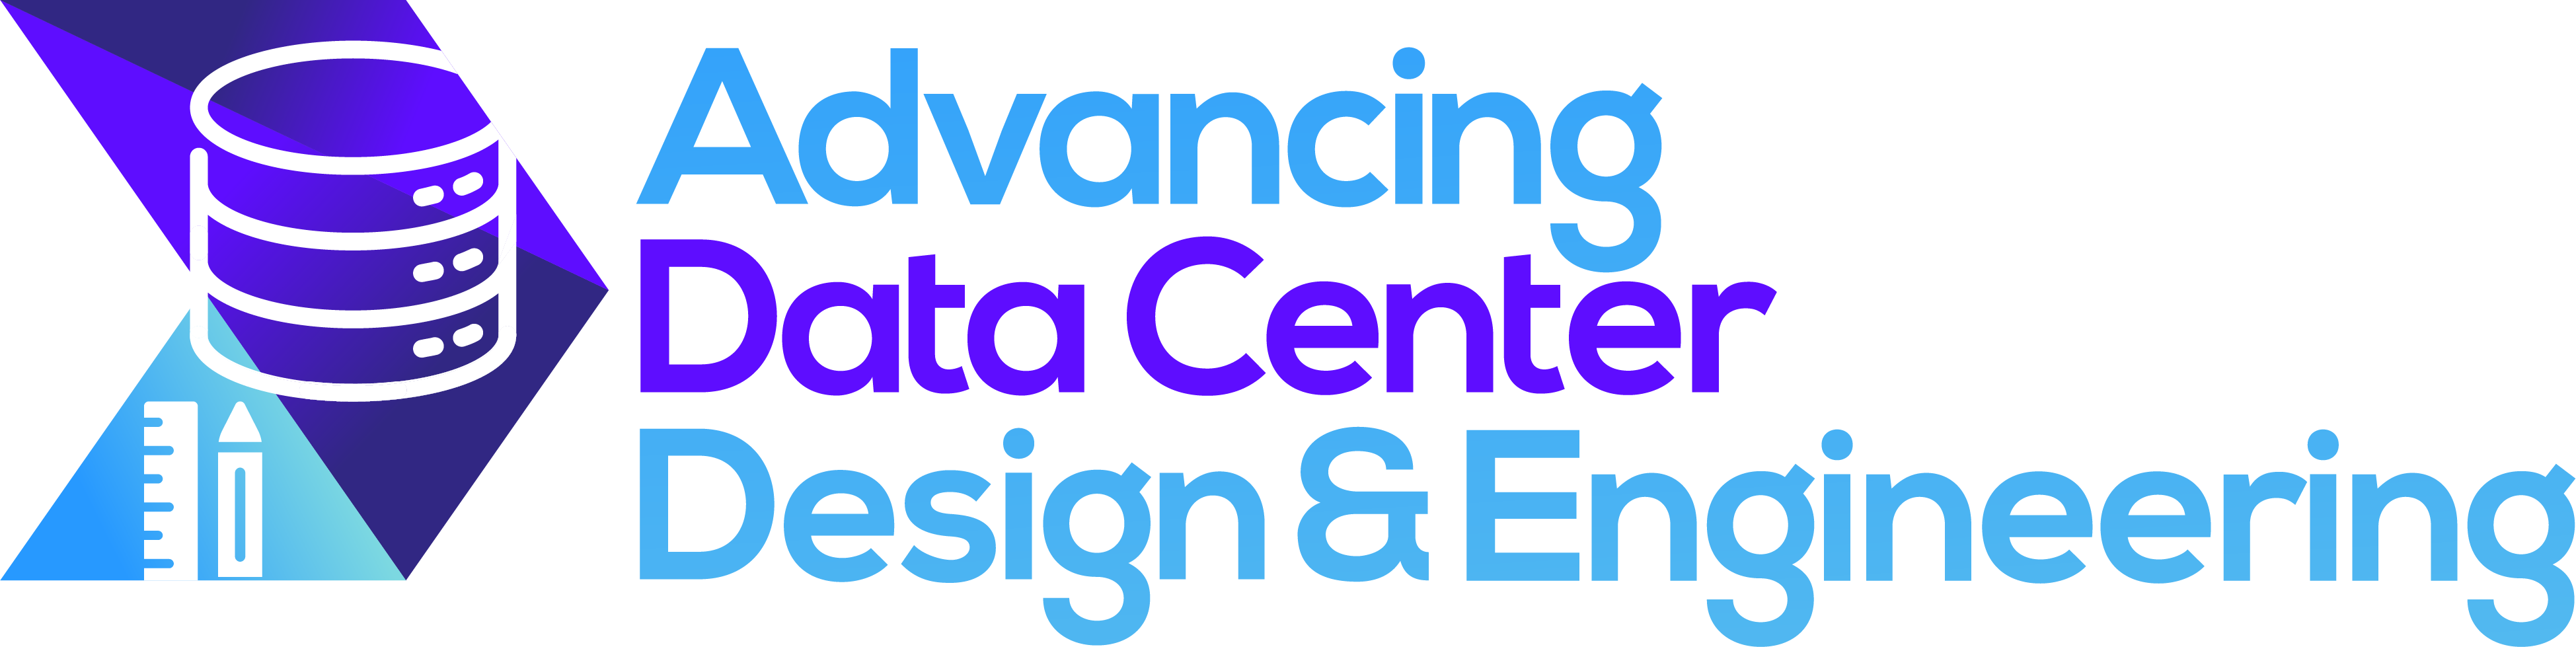 HW240412 Advancing Data Center Facility Design & Engineering logo (1)